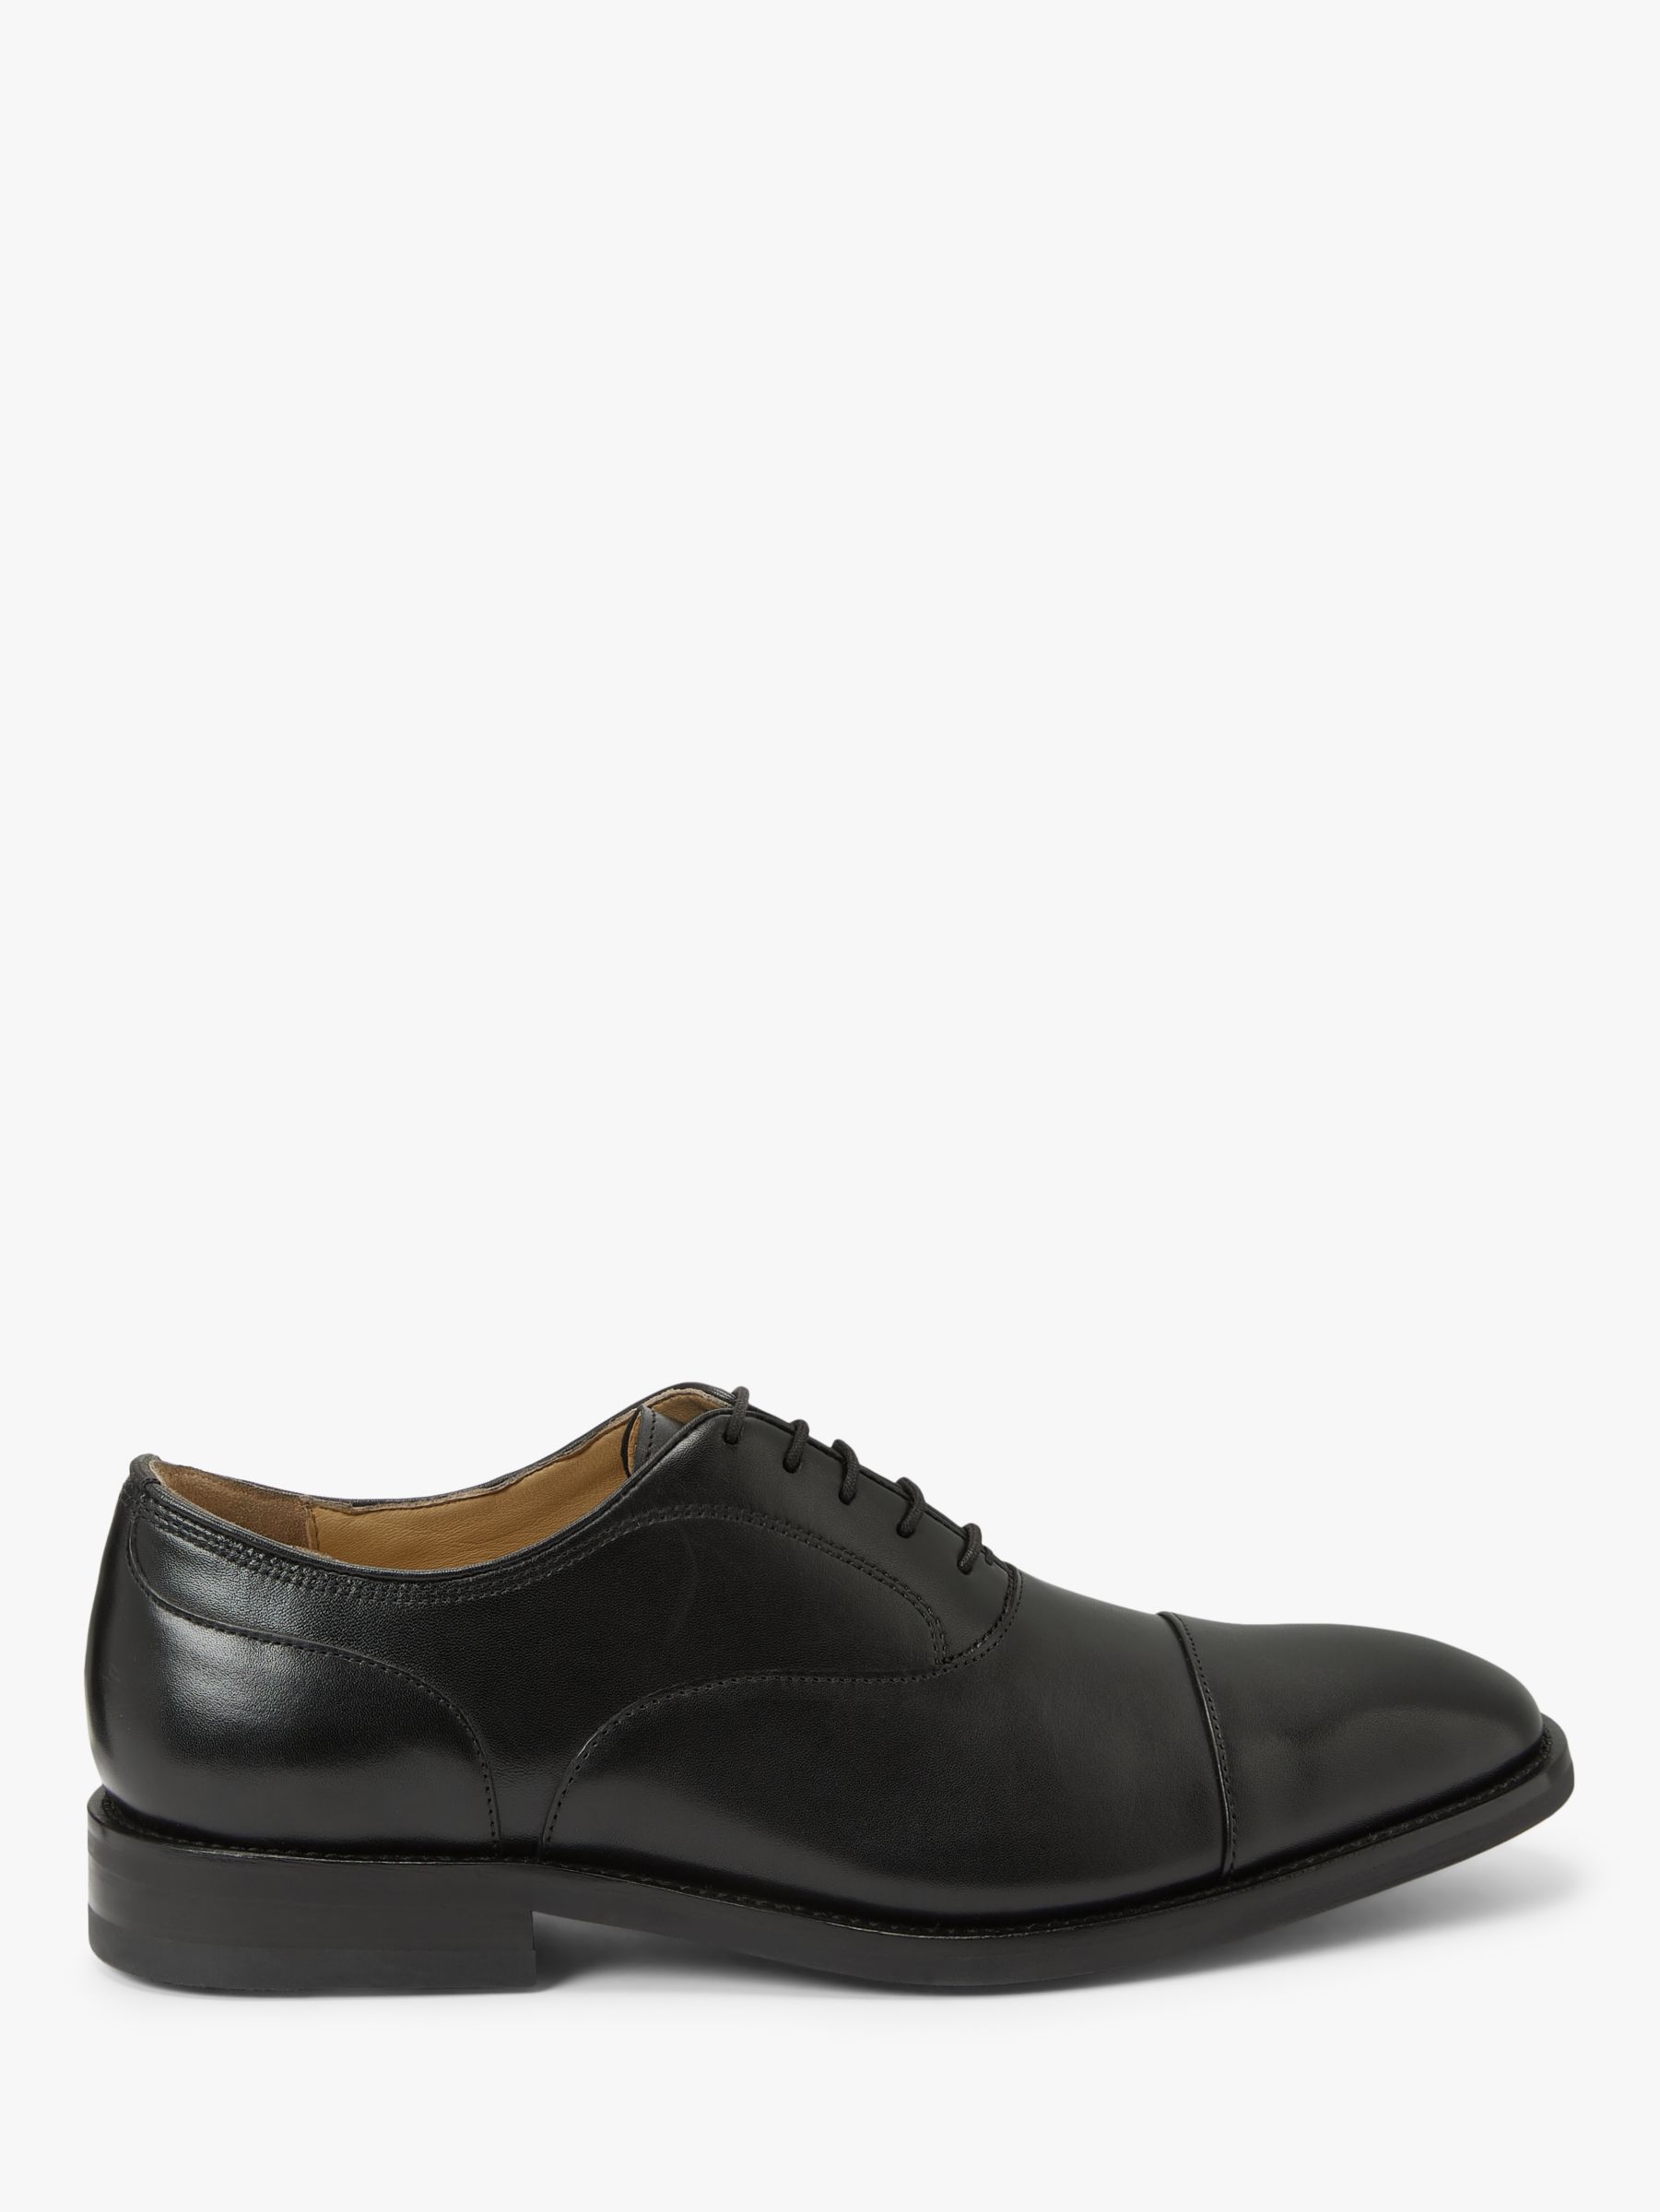 John Lewis Glympton Leather Oxford Shoes, Black, 7